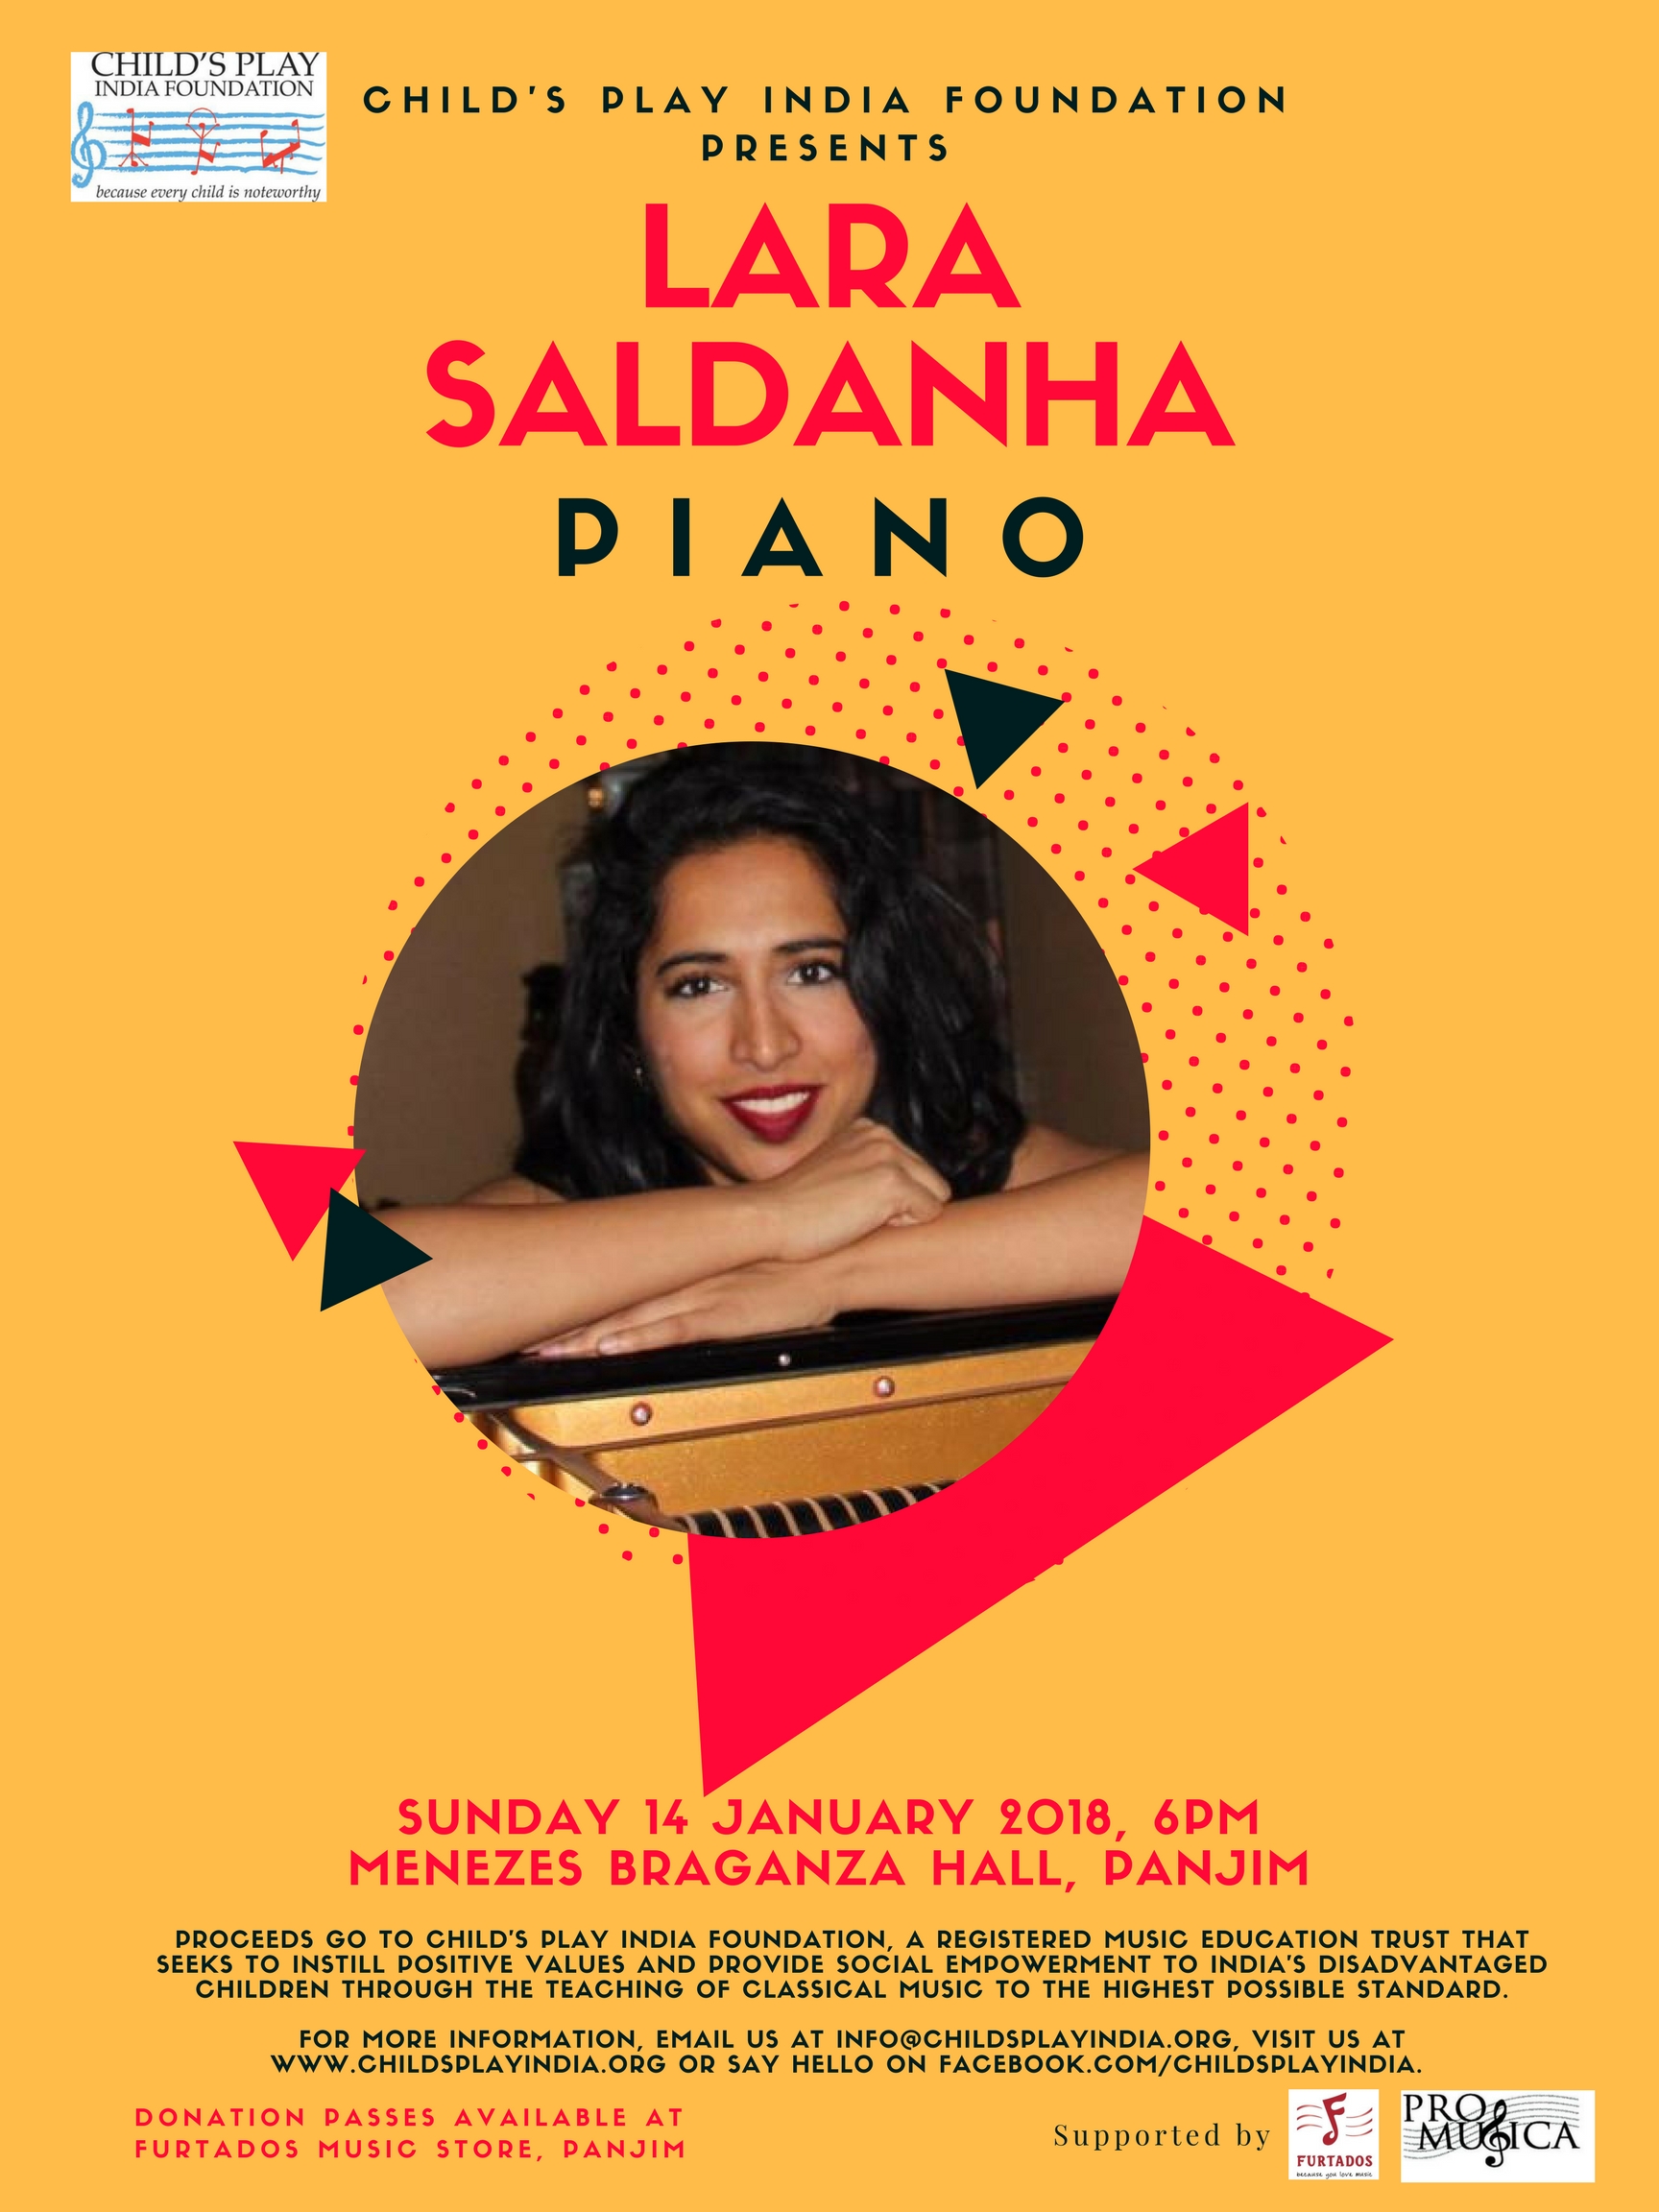 Lara Saldanha, piano